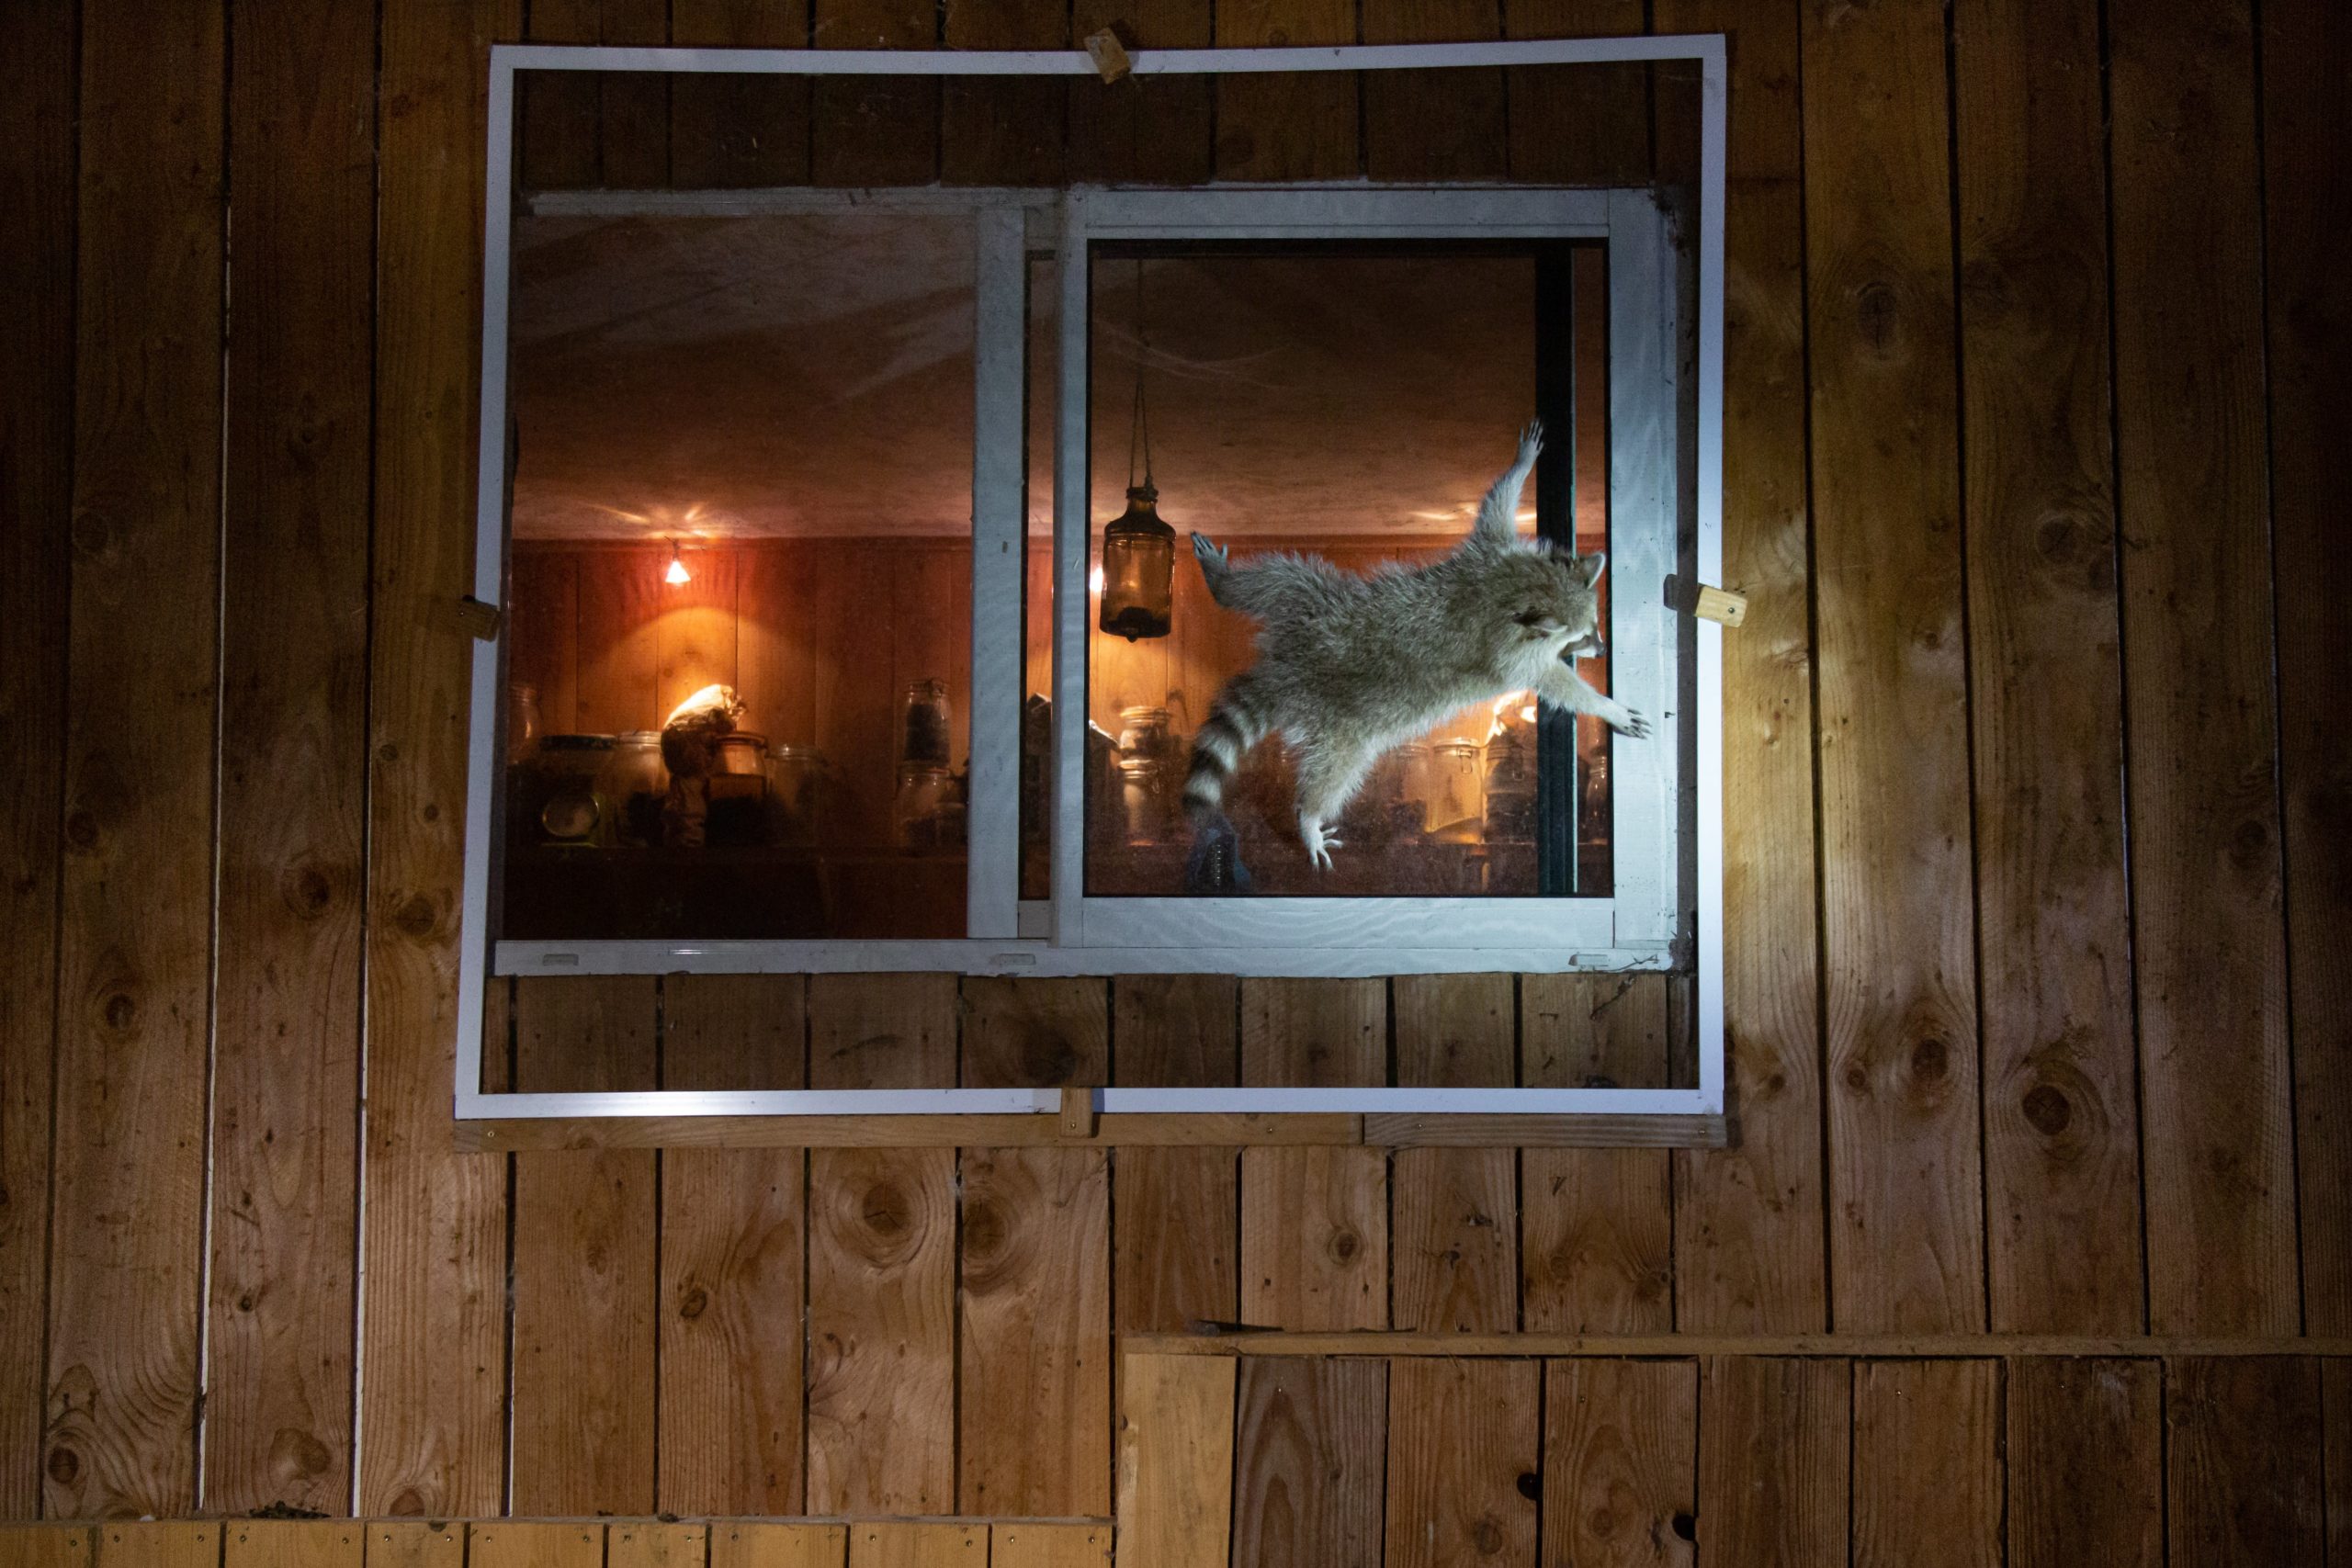 A raccoon holds tight to a window screen. (Photo: © Nicolas de Vaulx / Comedy Wildlife Photo Awards 2021)